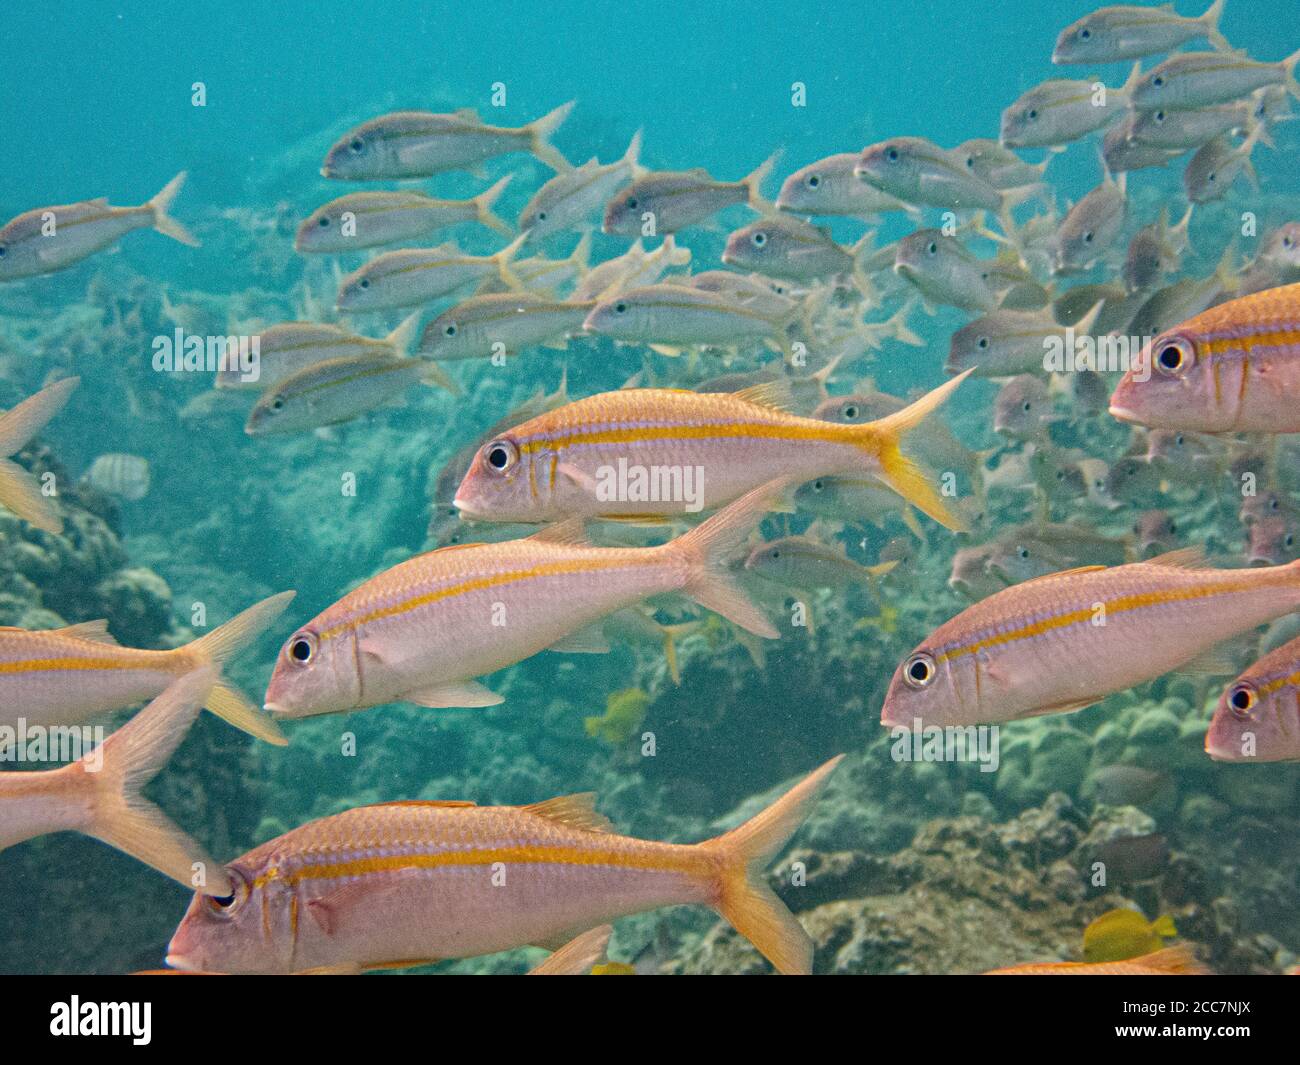 School of Yellowfin Goatfish at Honokohau Harbor. Stock Photo